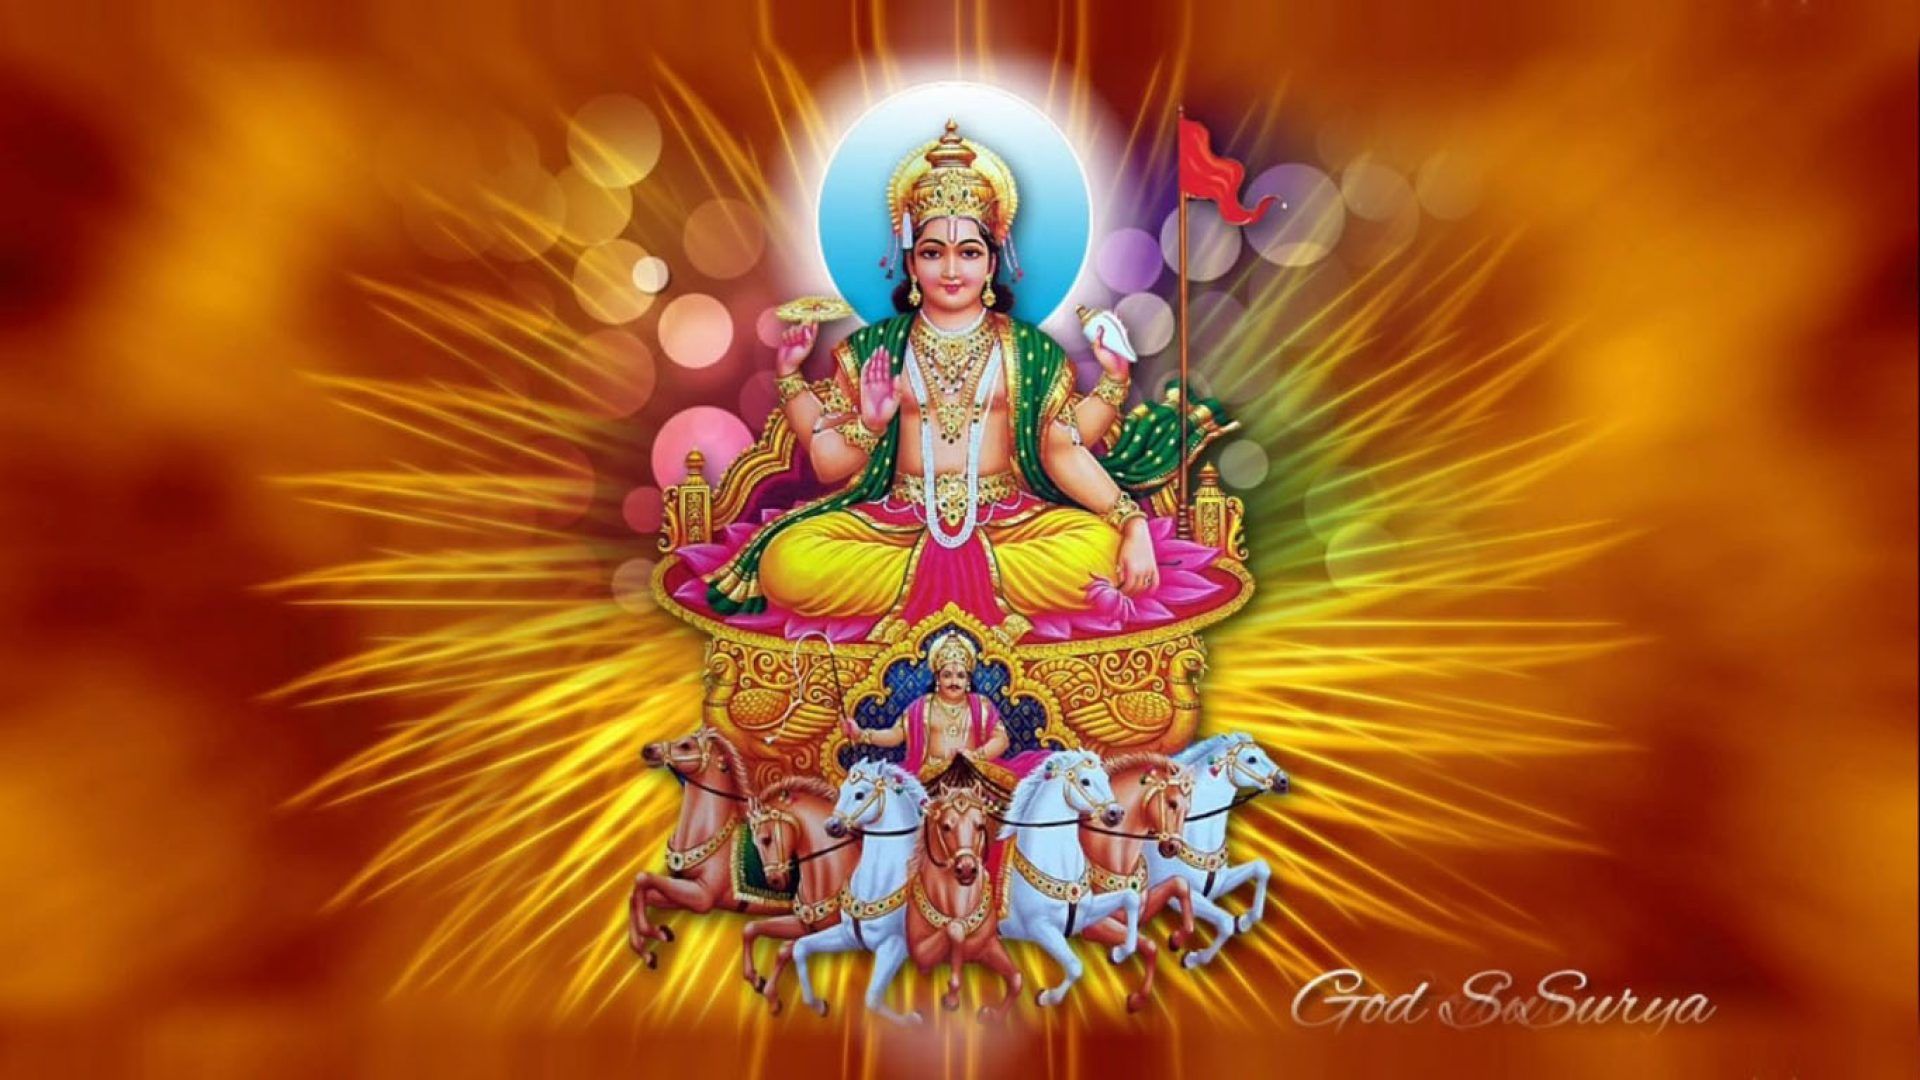 Surya Dev Full HD Wallpaper Download. Hindu Gods and Goddesses